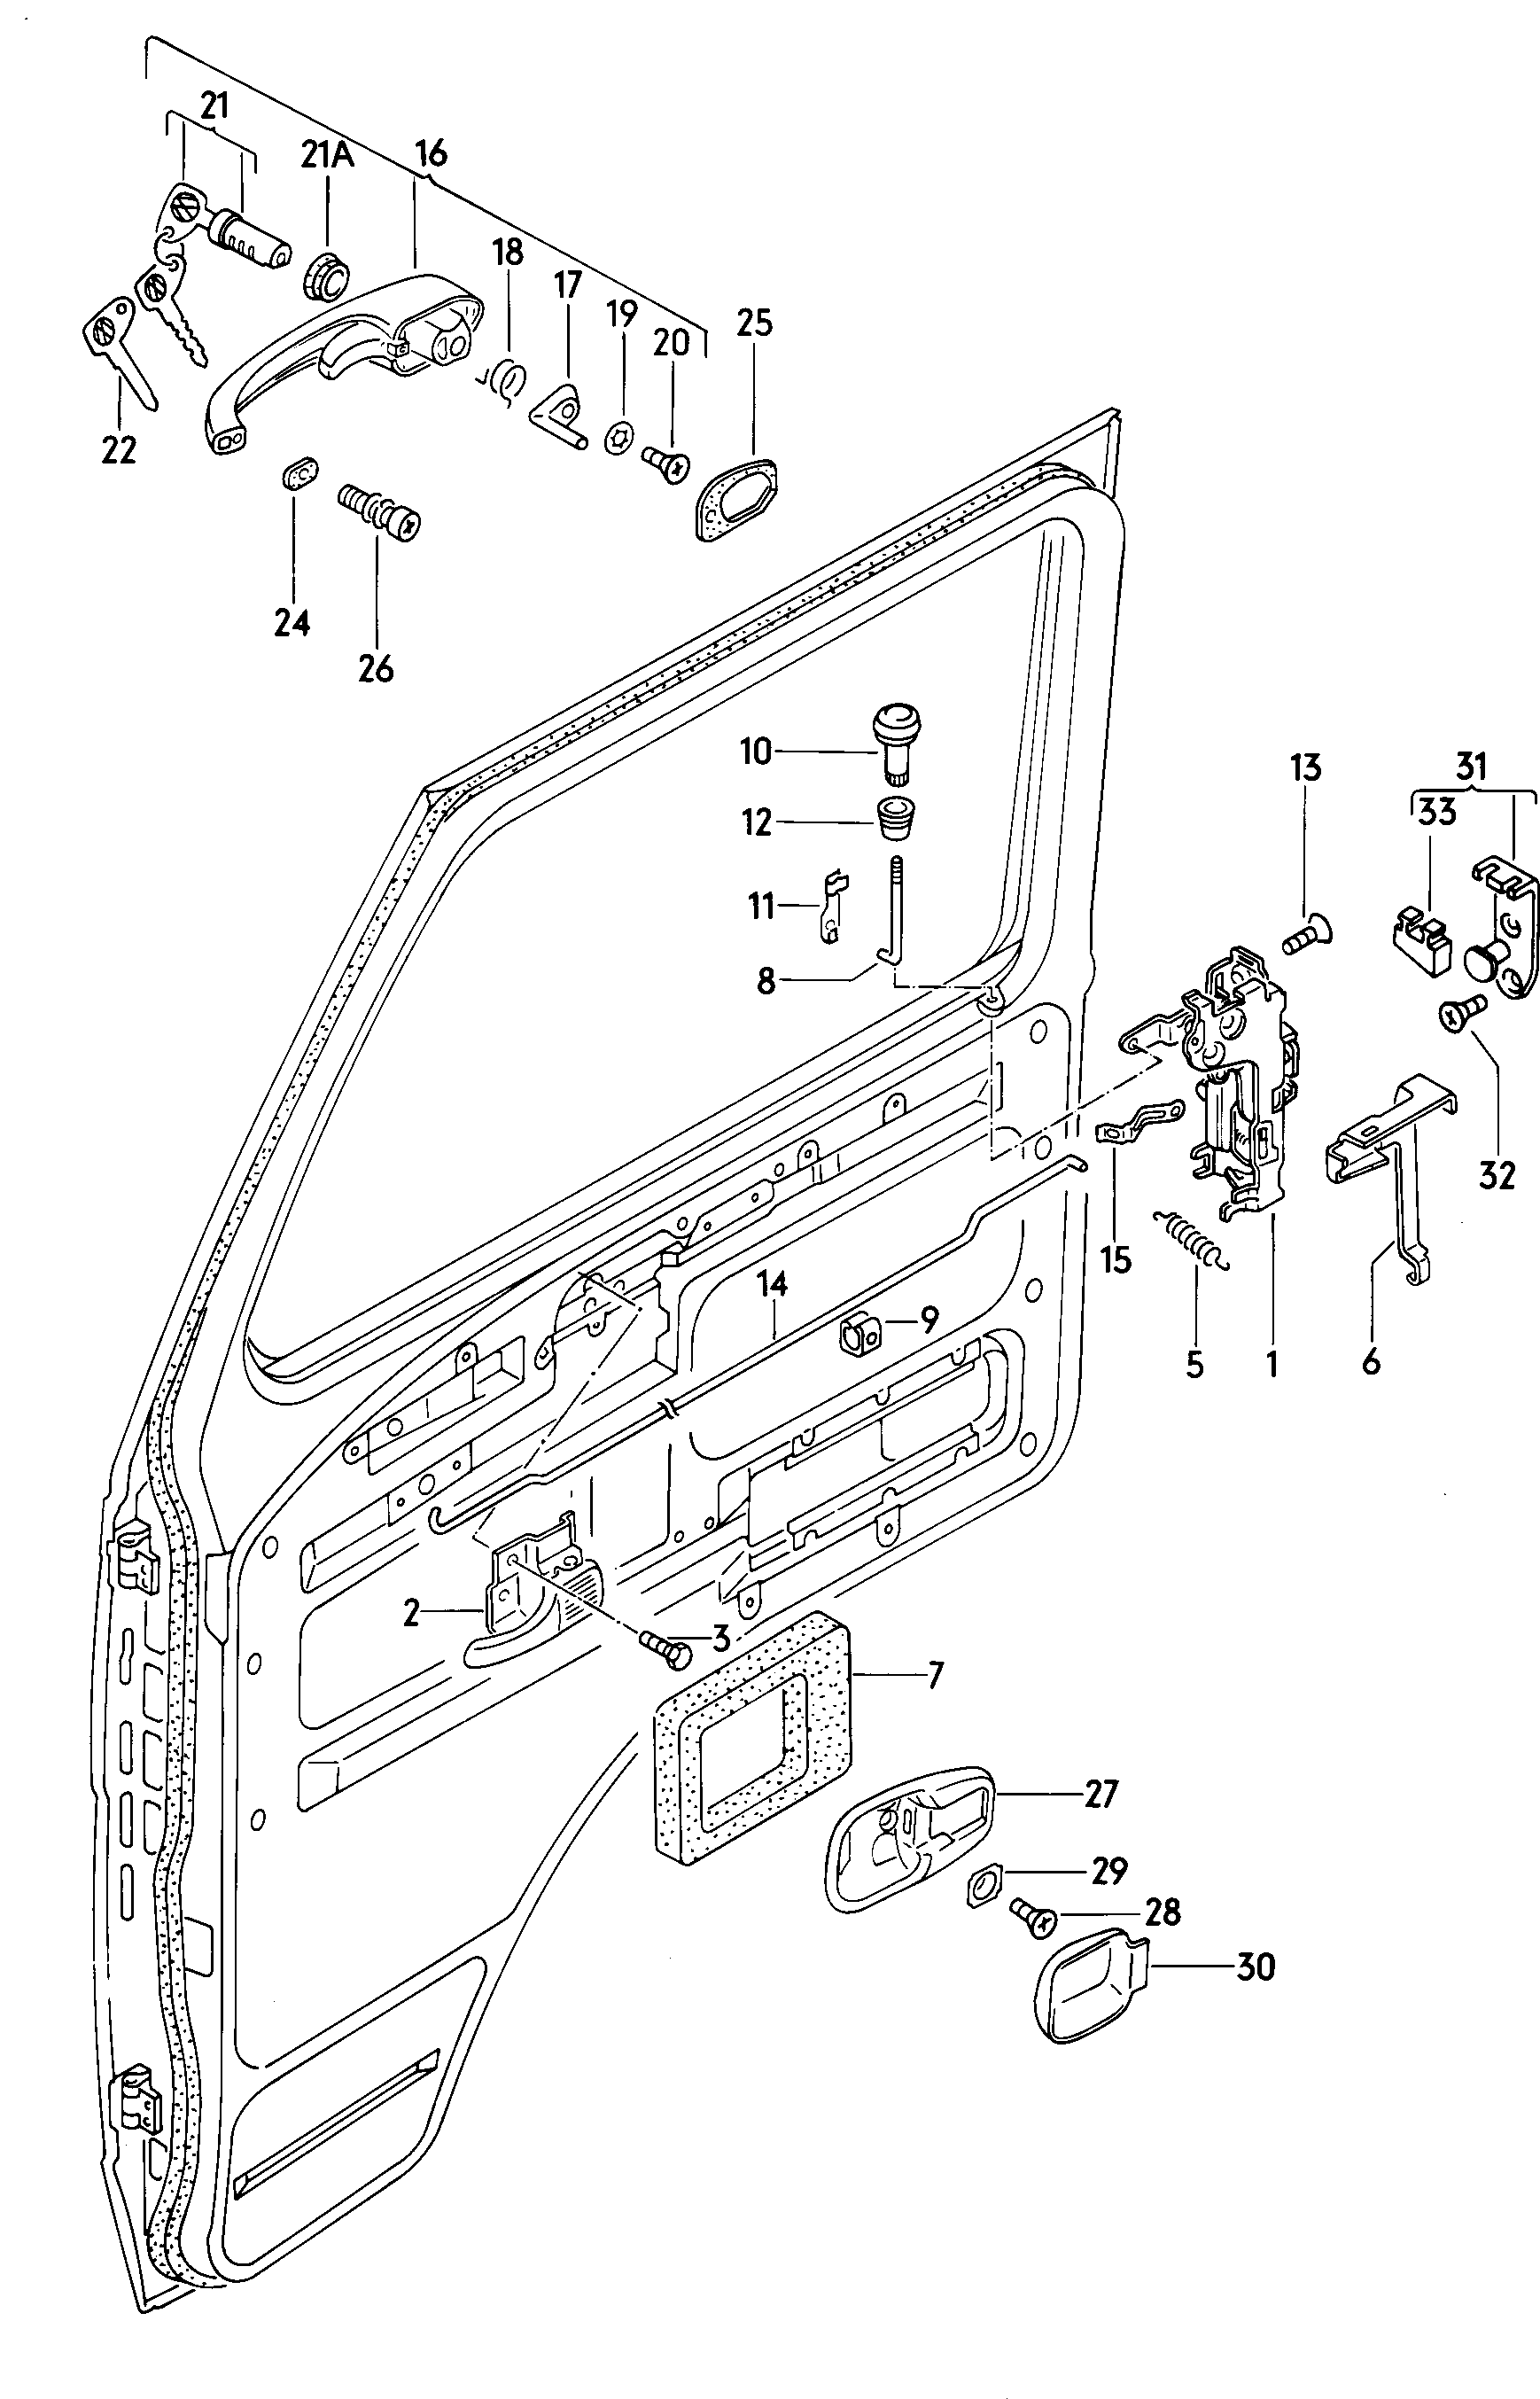 Zamek drzwiklamka wewnetrznaklamka zewnetrzna przod - LT, LT 4x4 - lt